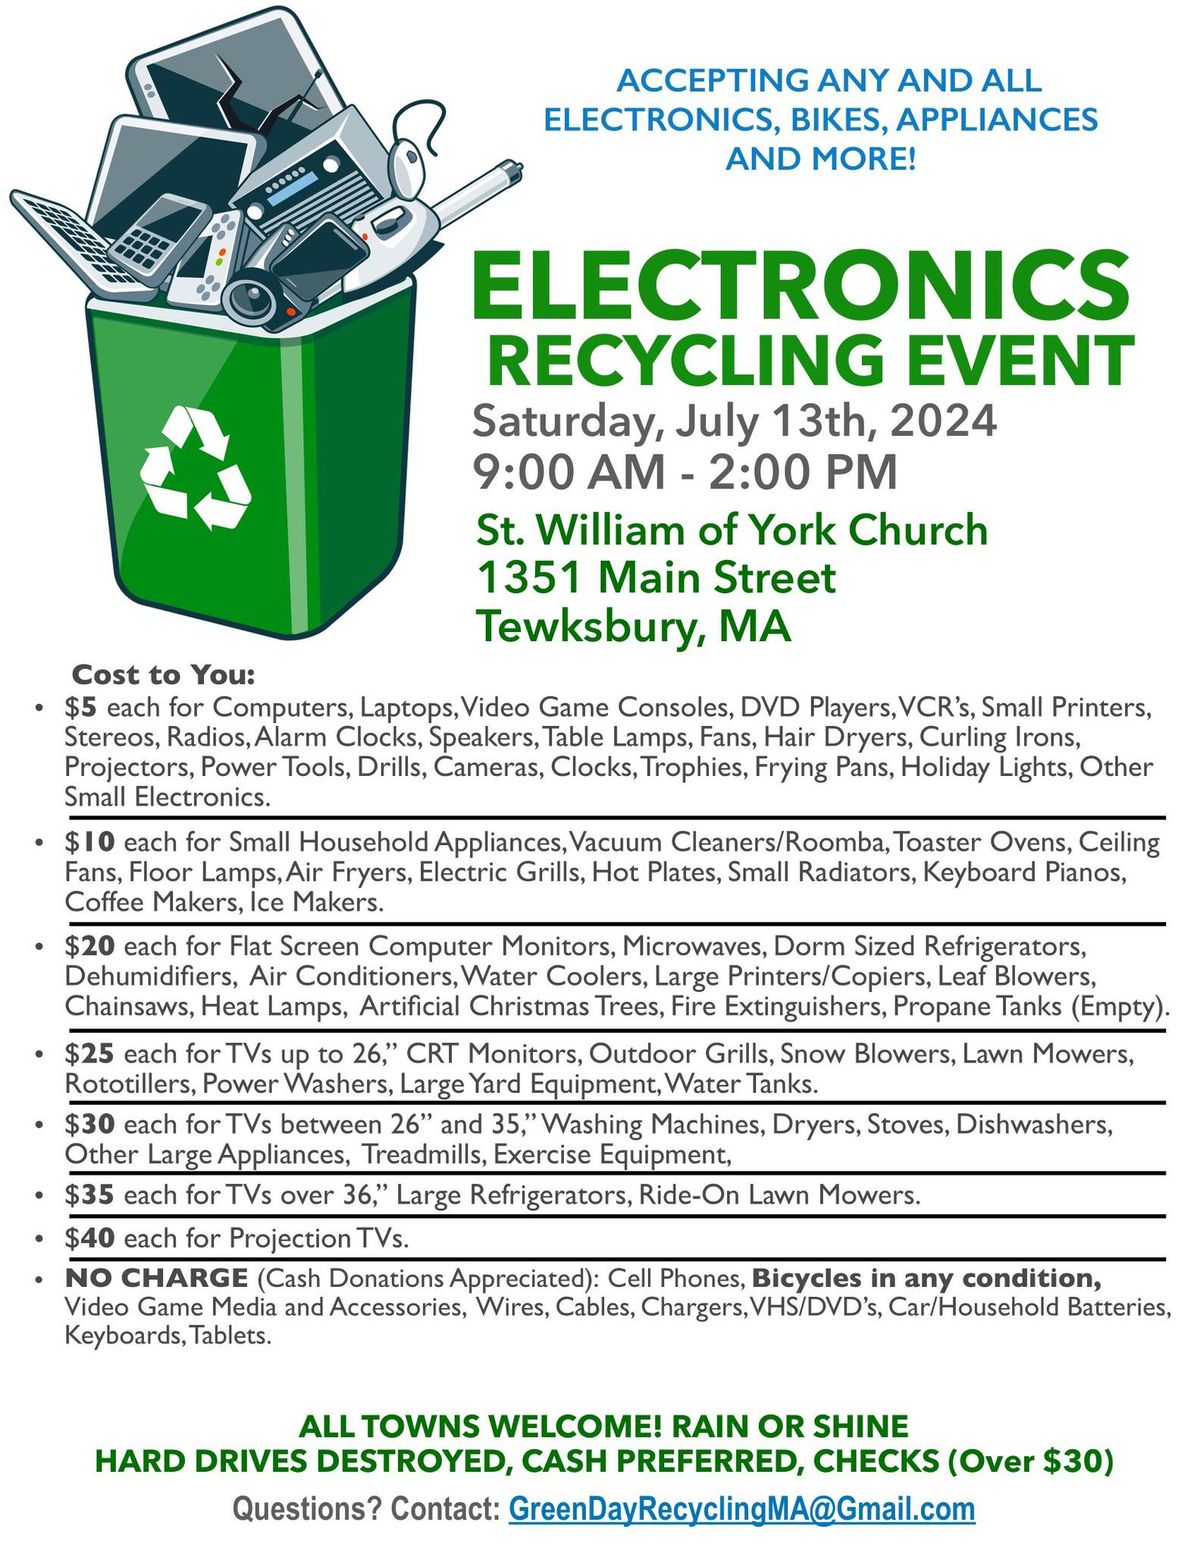 Tewksbury Electronics Recycling Event